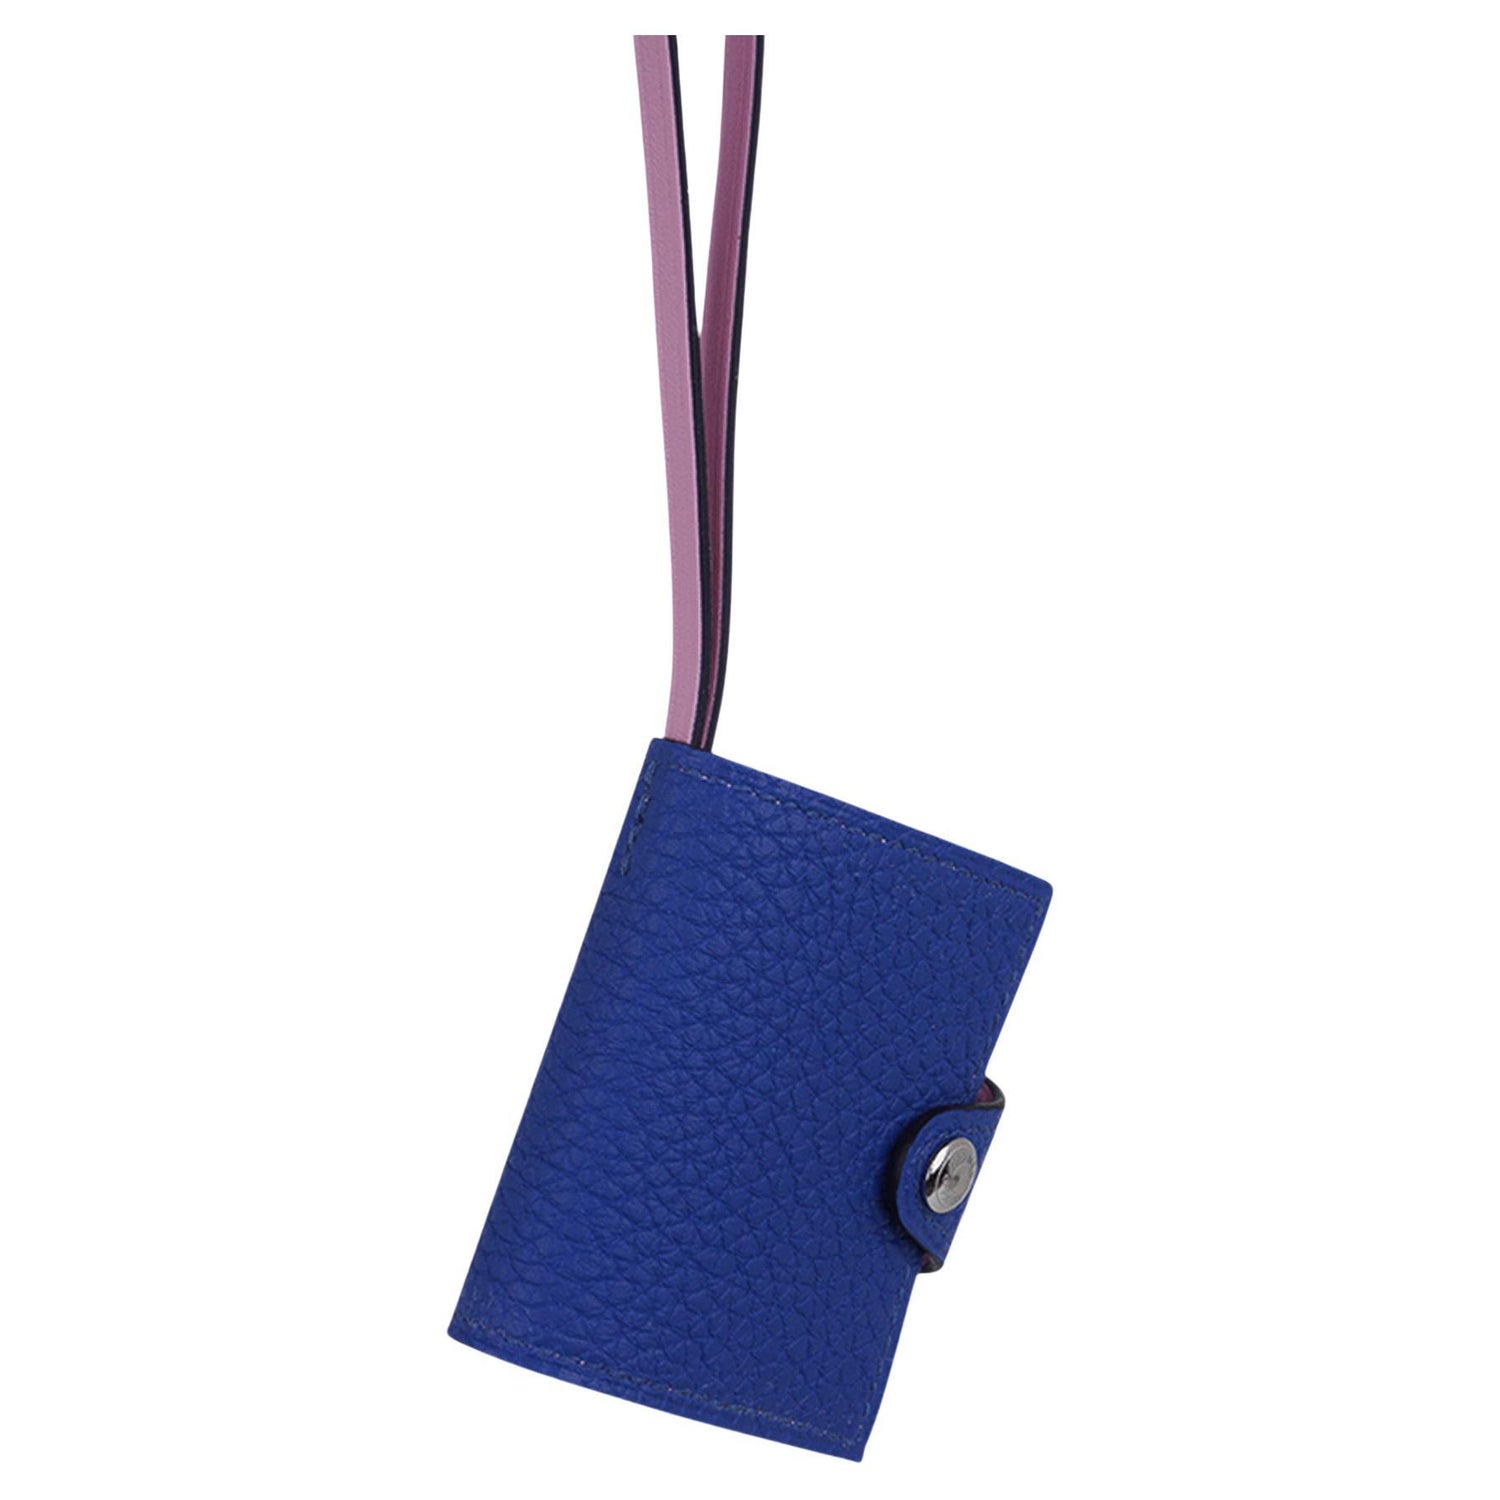 Hermes Notebook Charm - 5 For Sale on 1stDibs